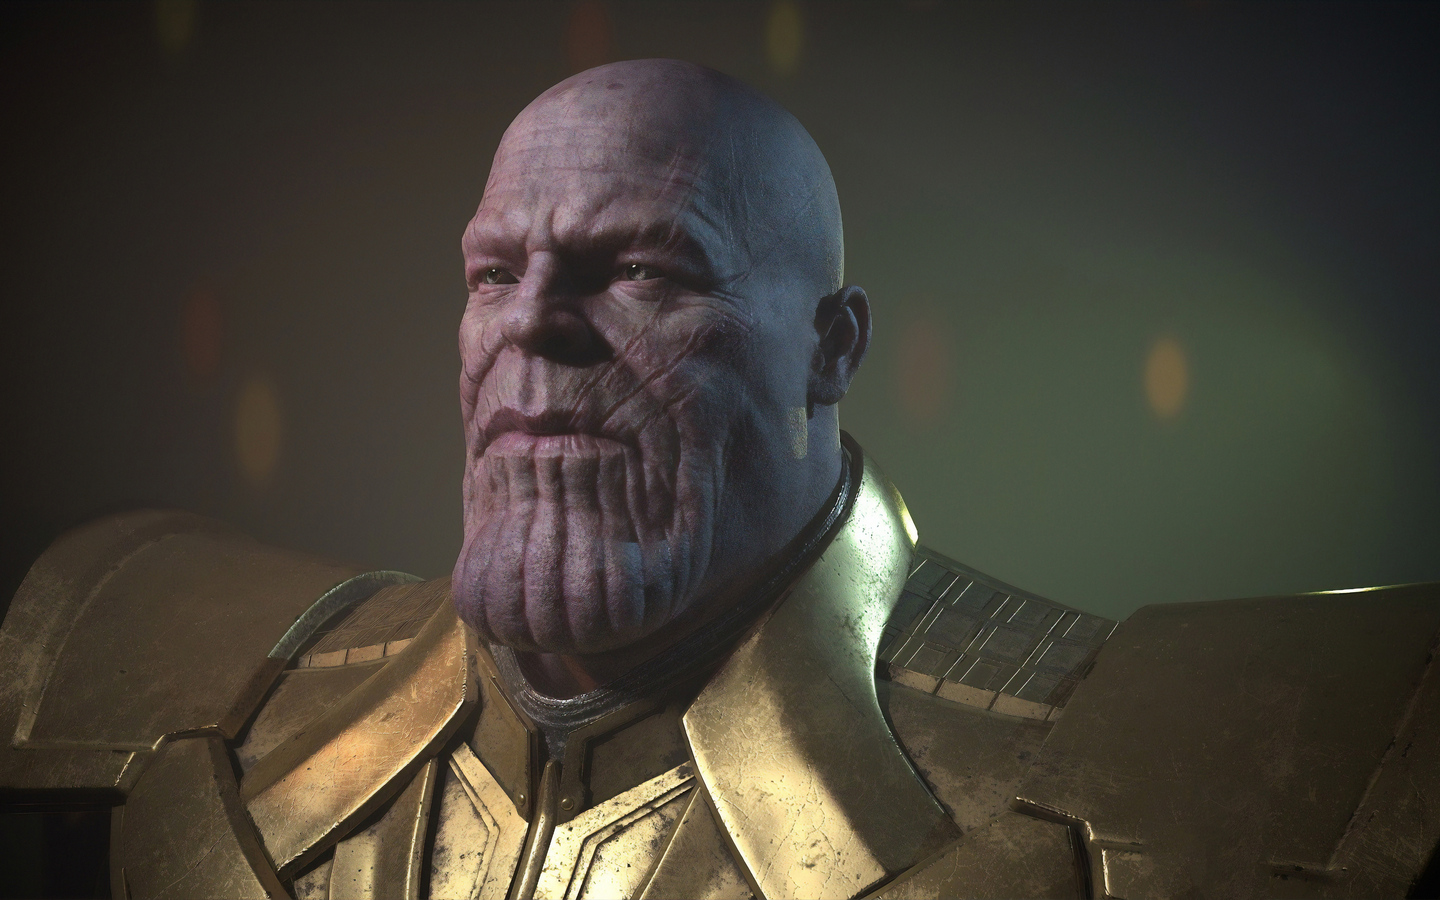 Thanos 4k Cgi In 1440x900 Resolution. thanos-4k-cgi-xi.jpg. 